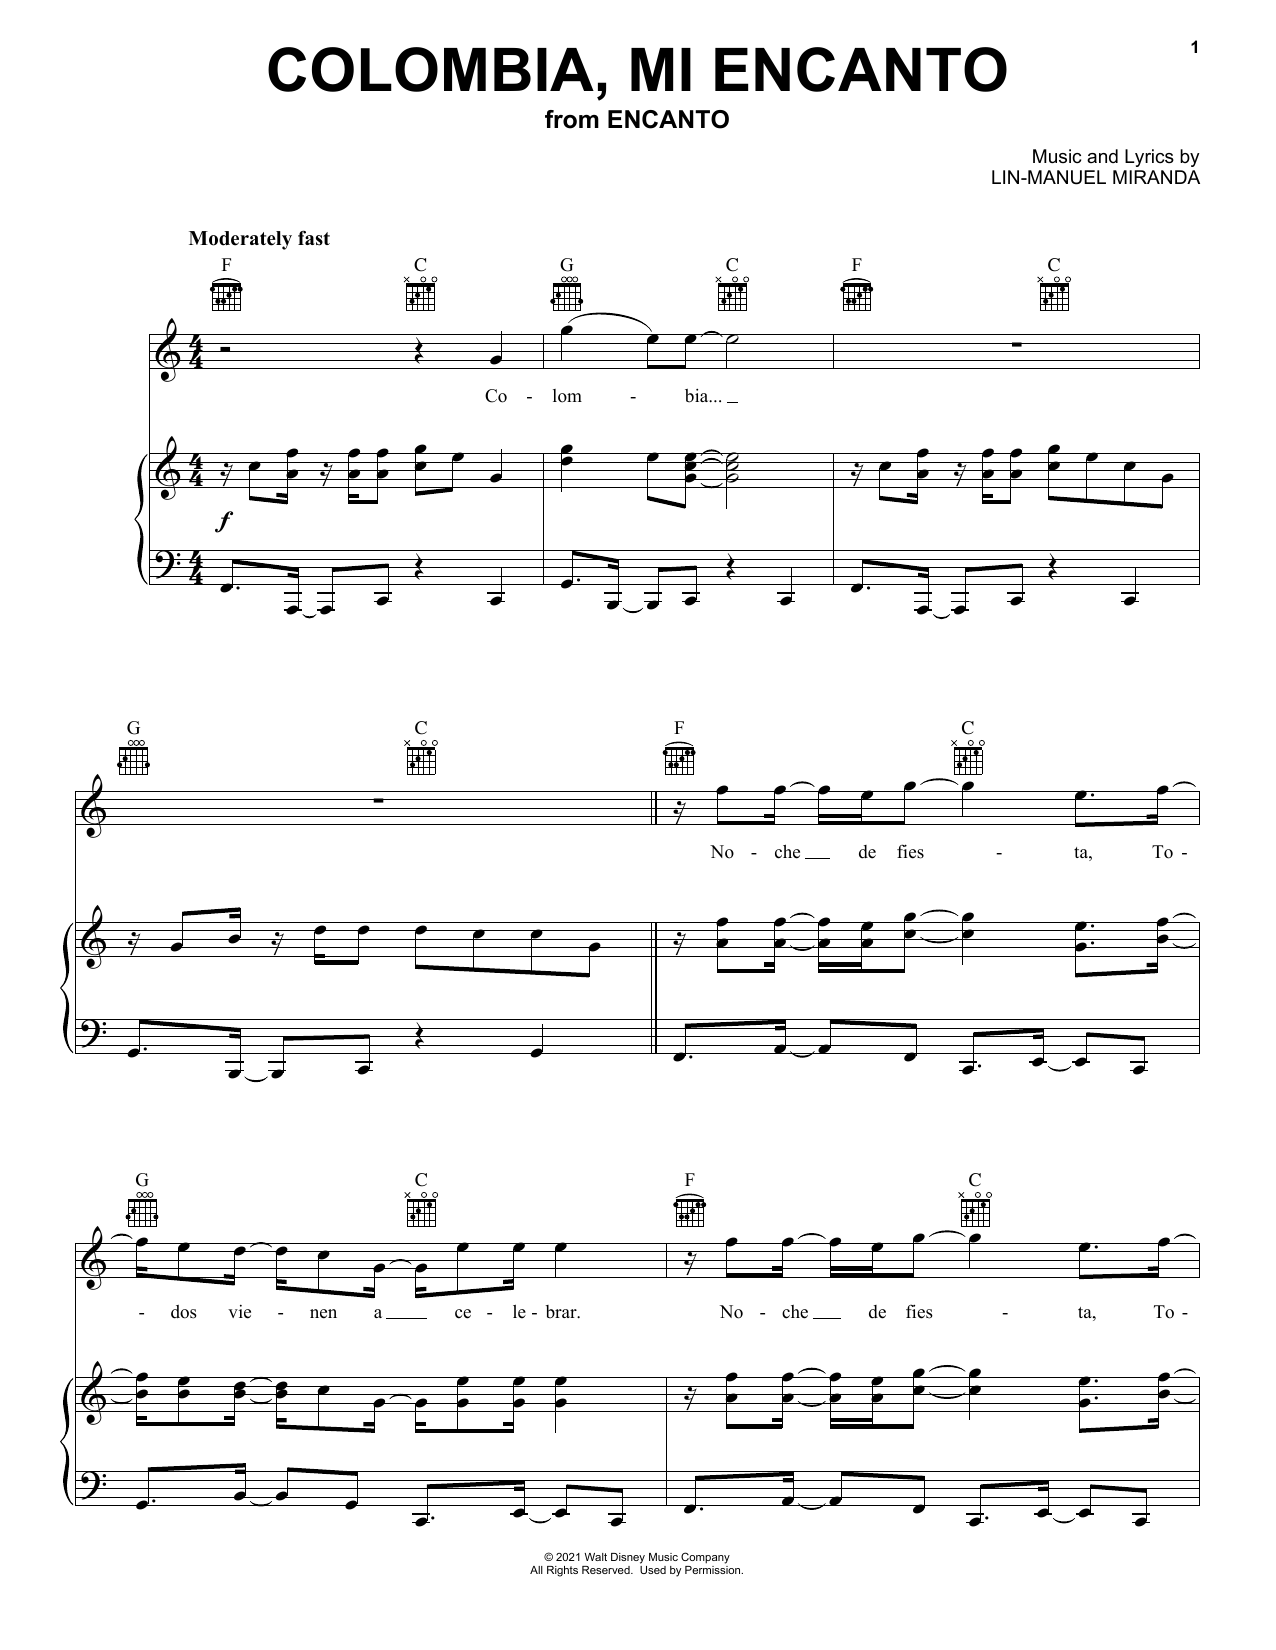 Lin-Manuel Miranda Colombia, Mi Encanto (from Encanto) Sheet Music Notes & Chords for Ukulele - Download or Print PDF